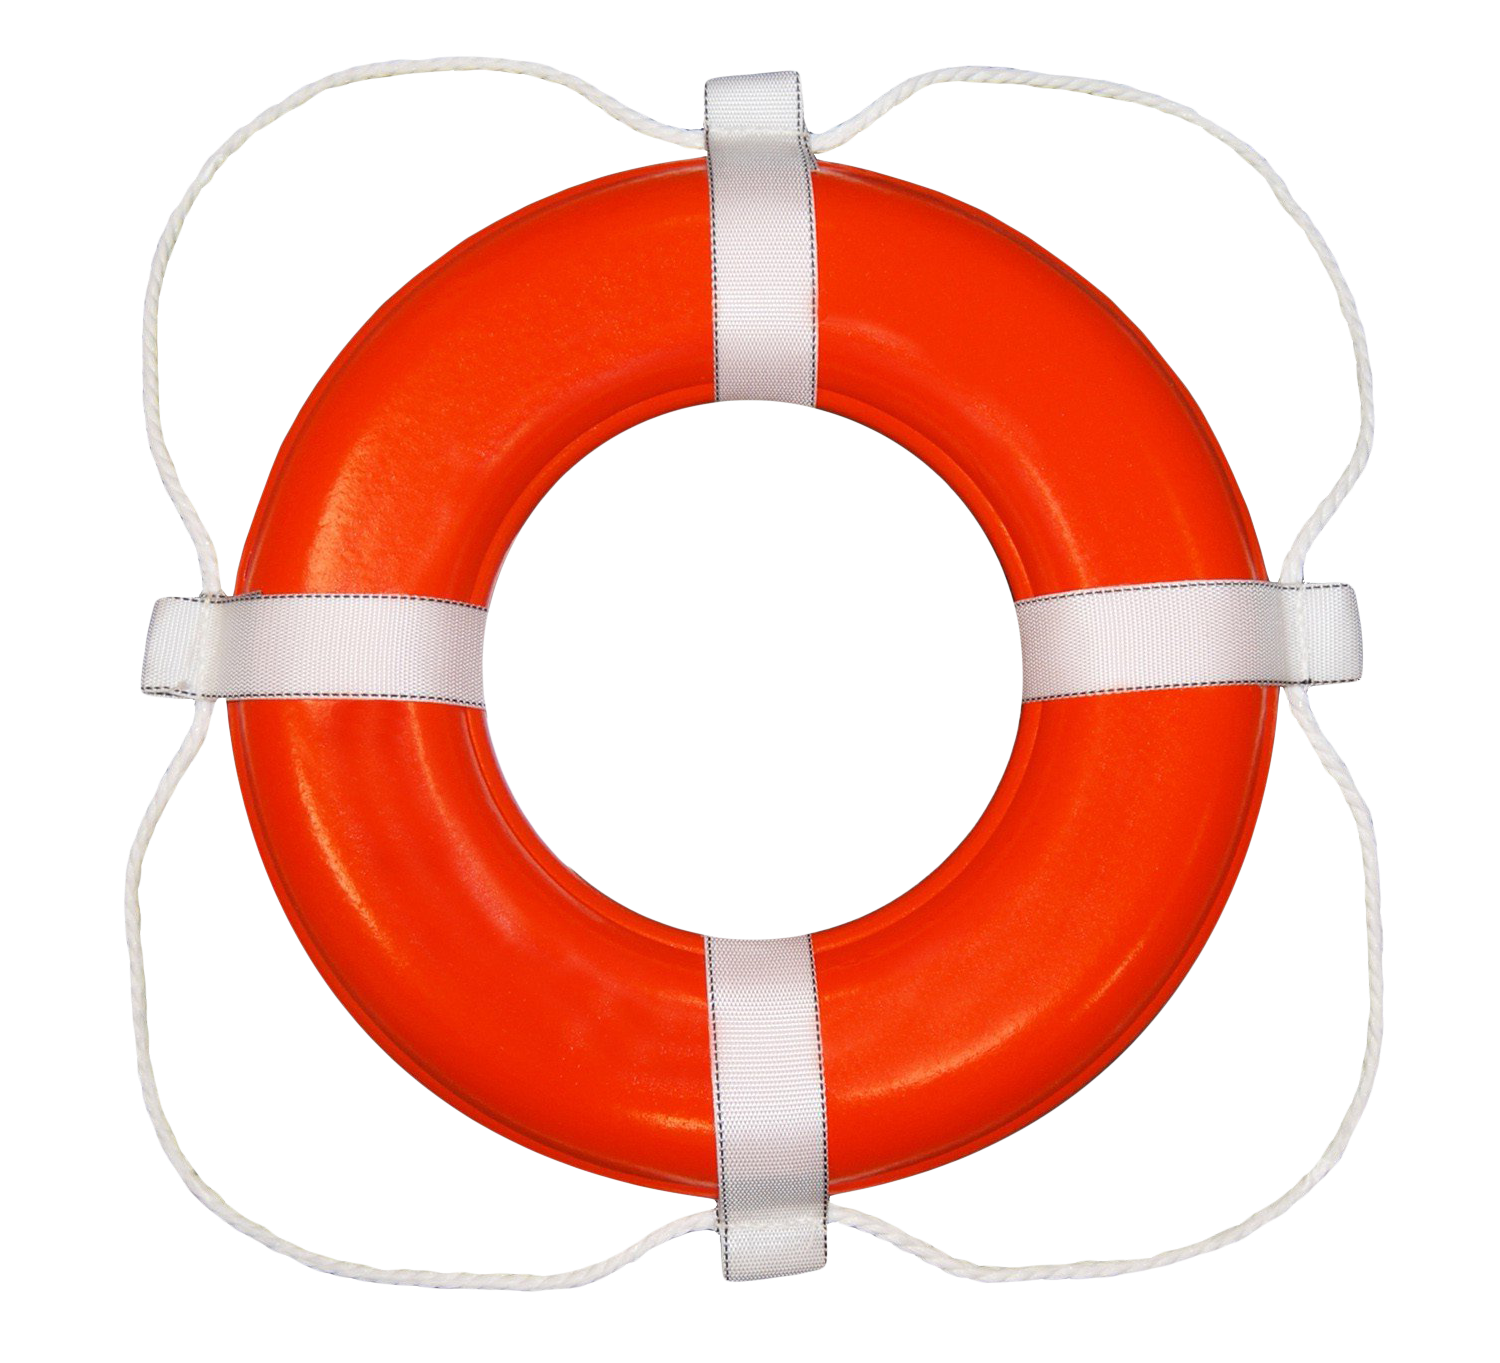 Lifeguard clipart life preserver. Lifebuoy png images free